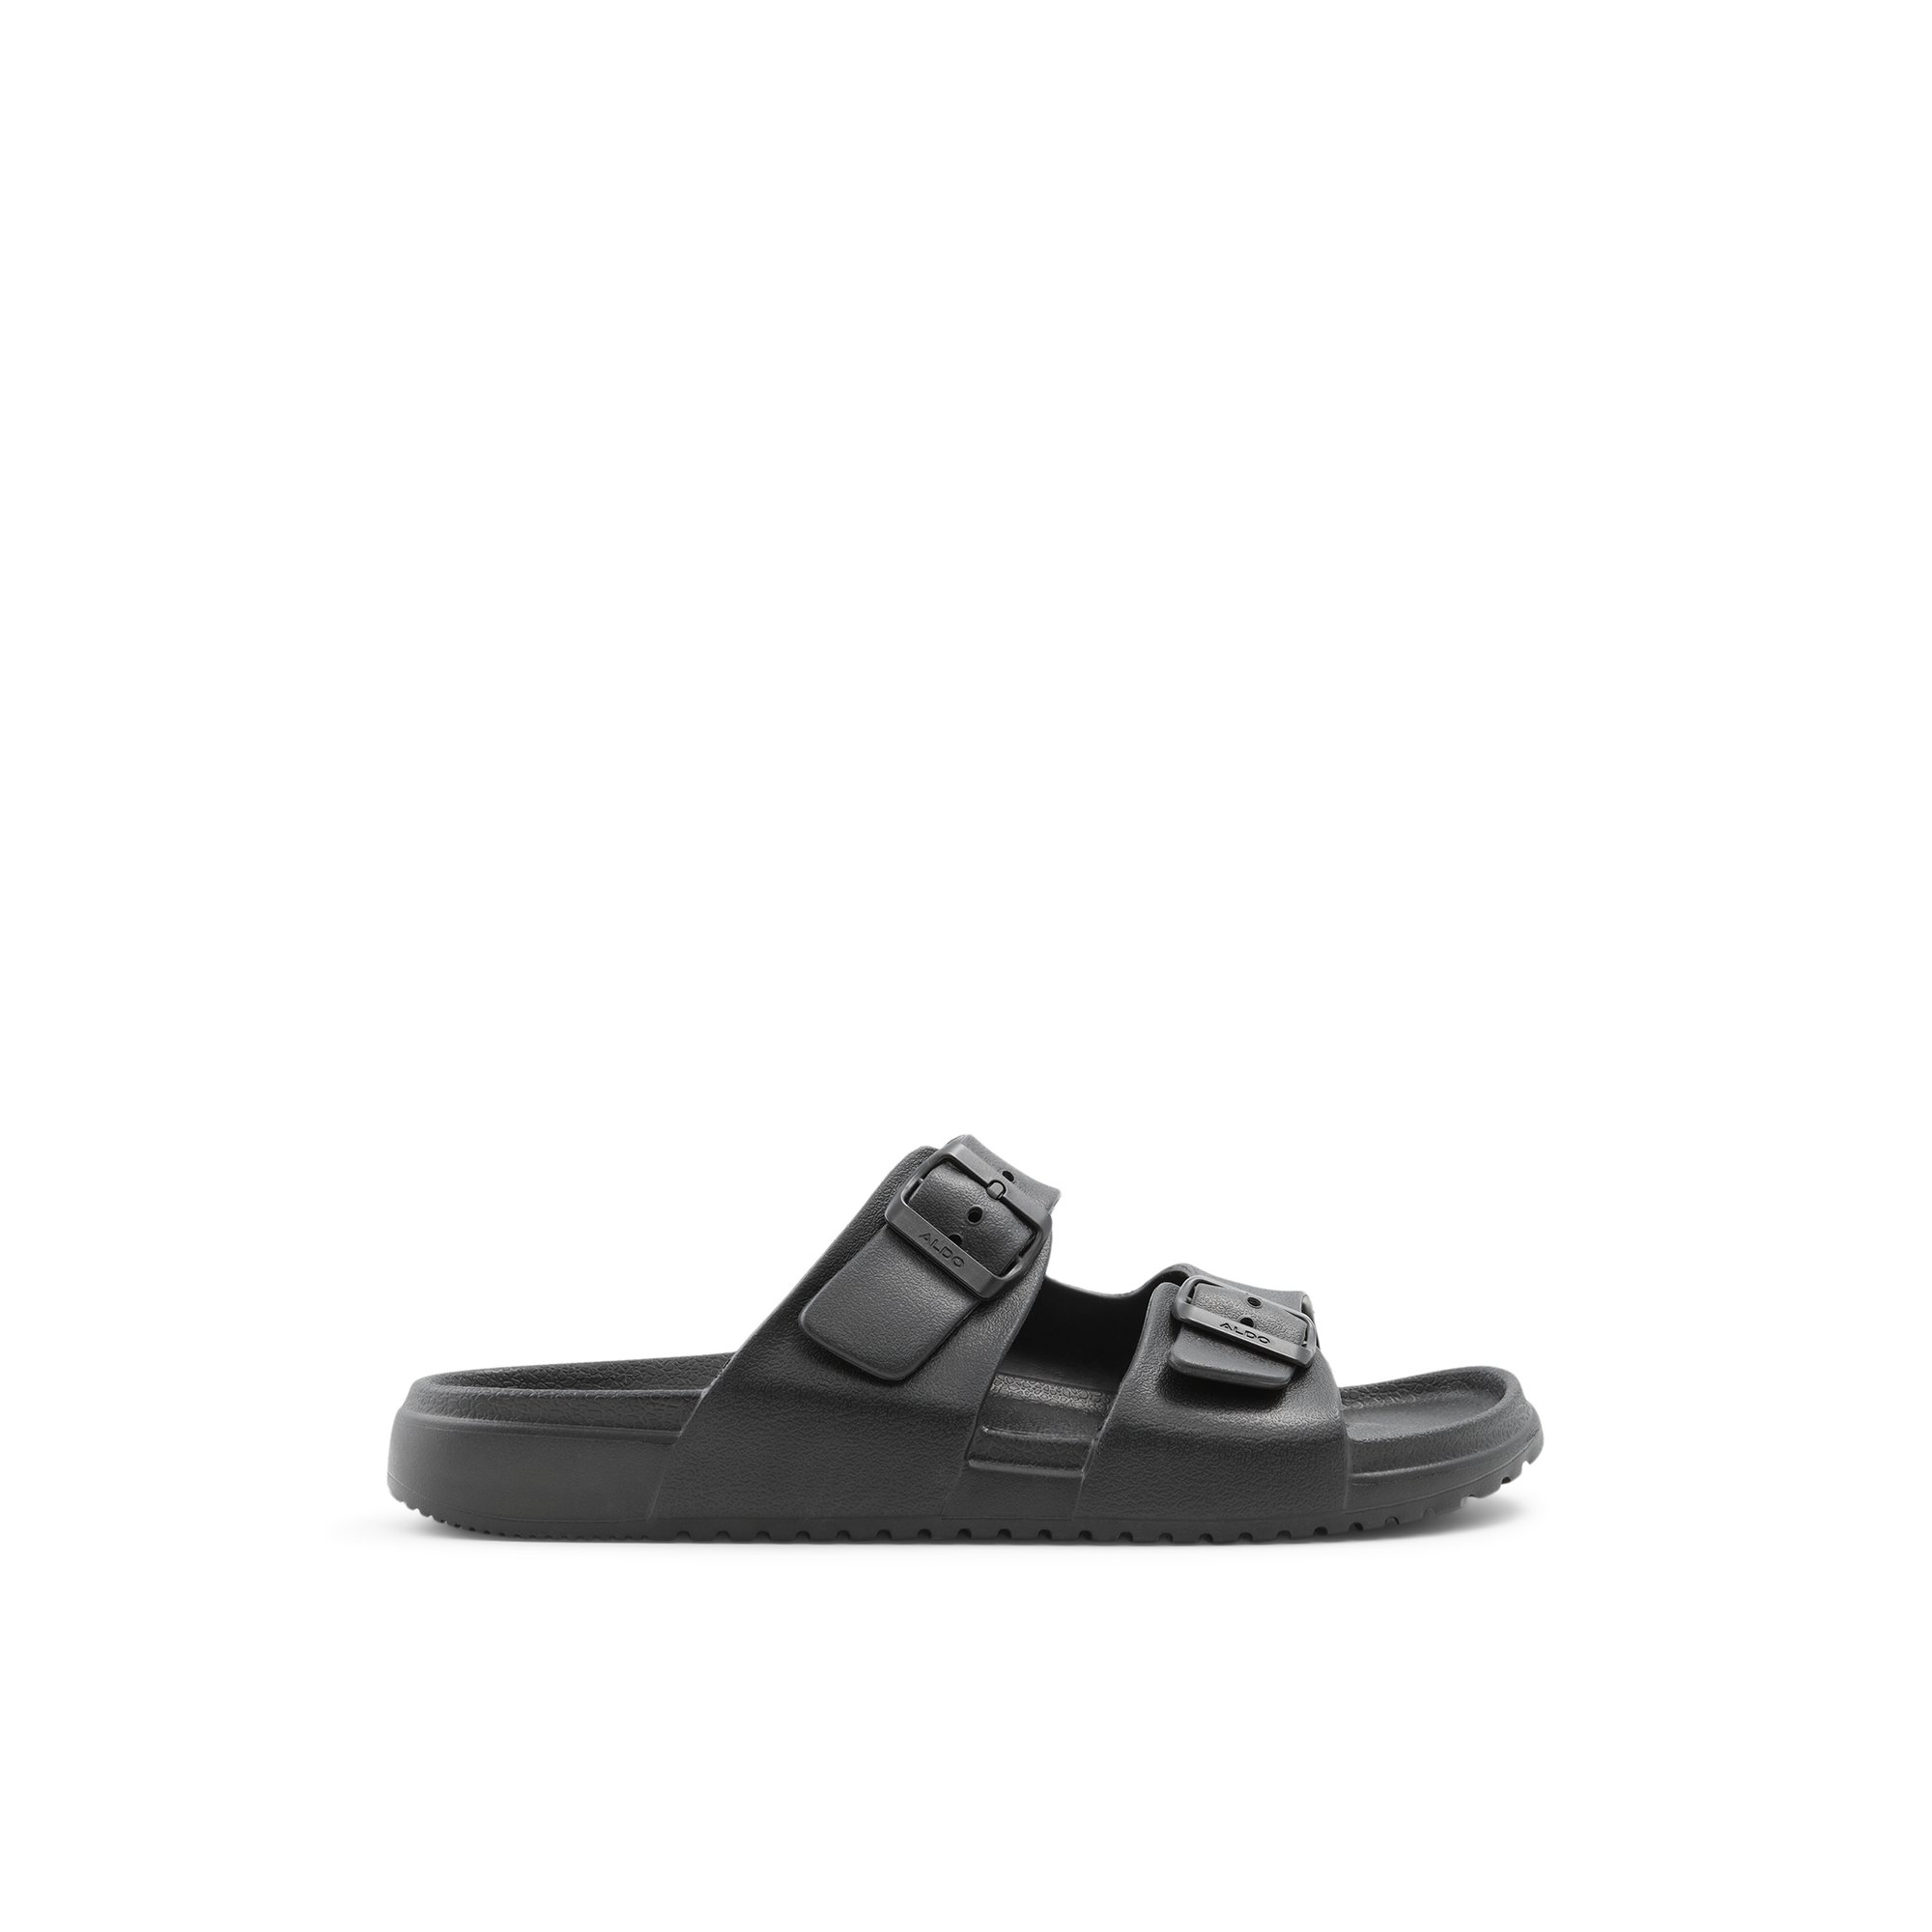 ALDO Hideo - Men's Sandals Slides - Black